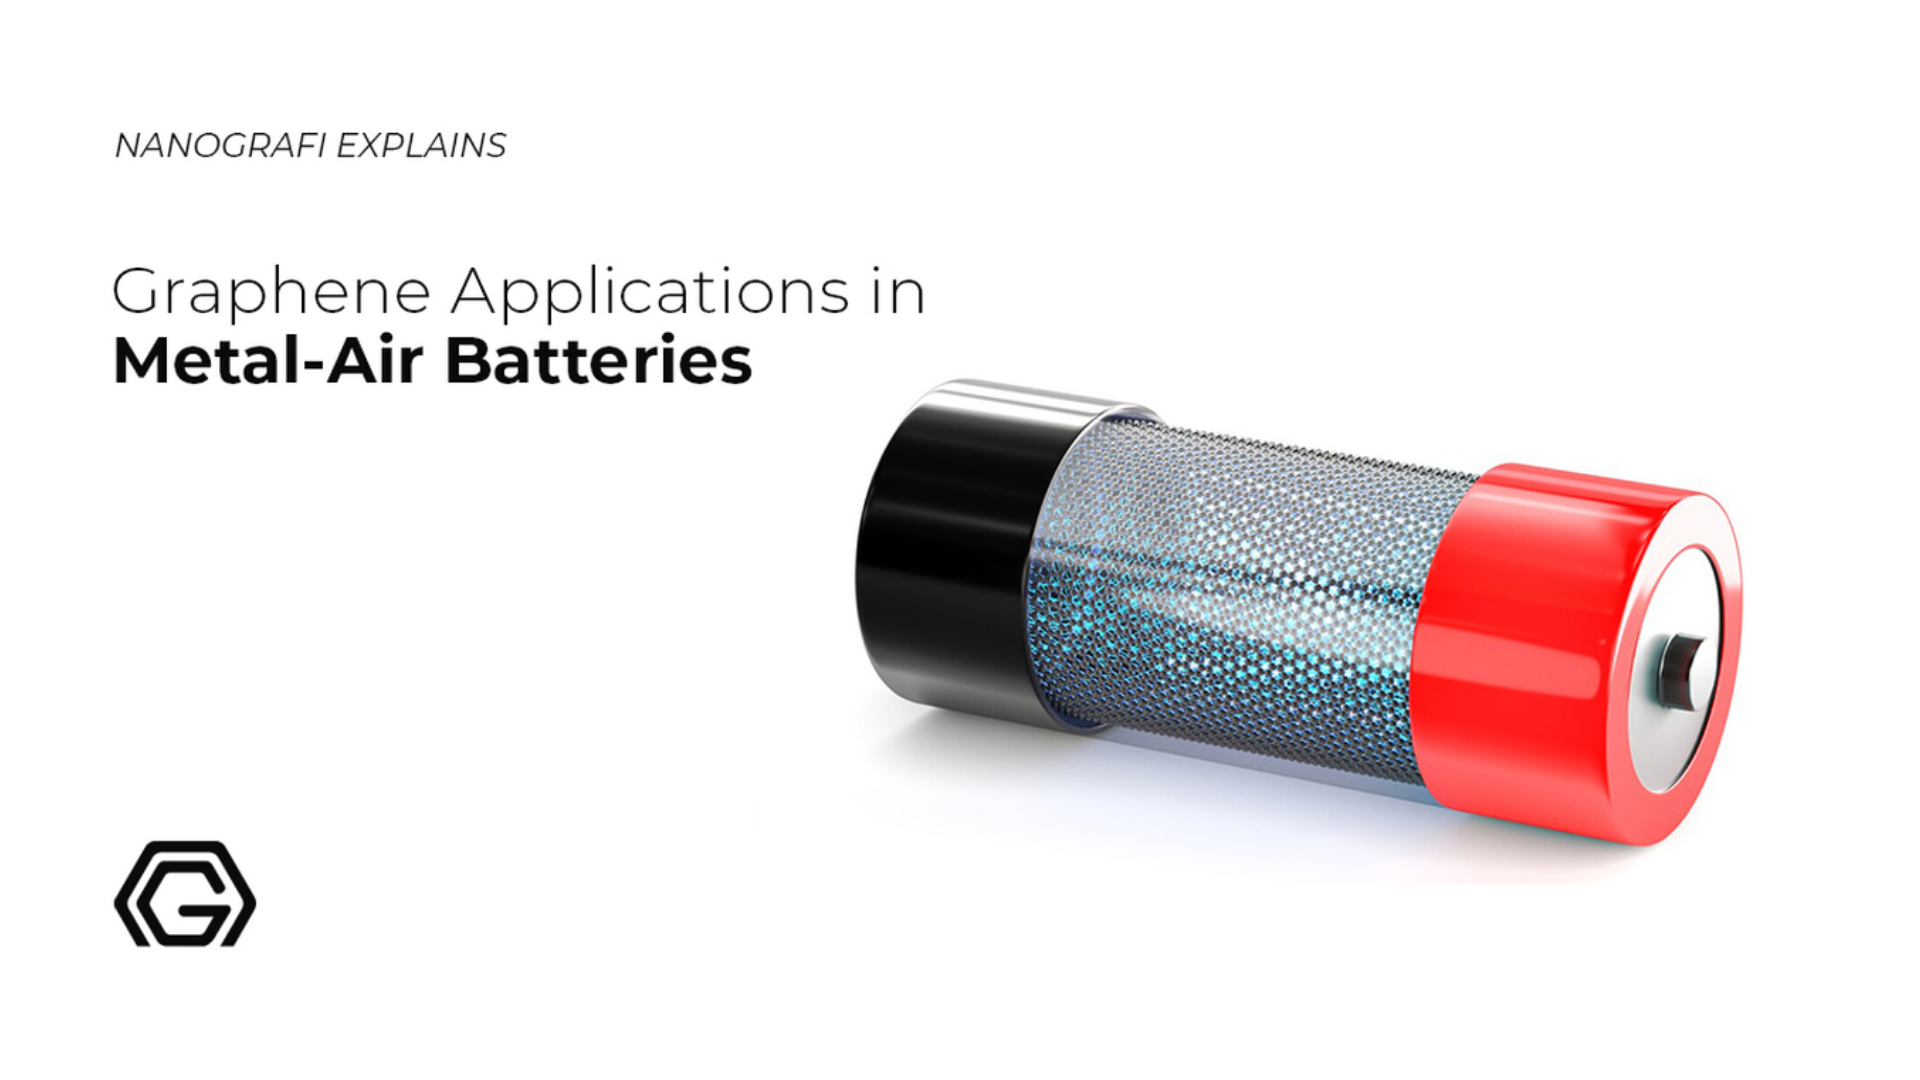 Graphene applications in metal-air batteries